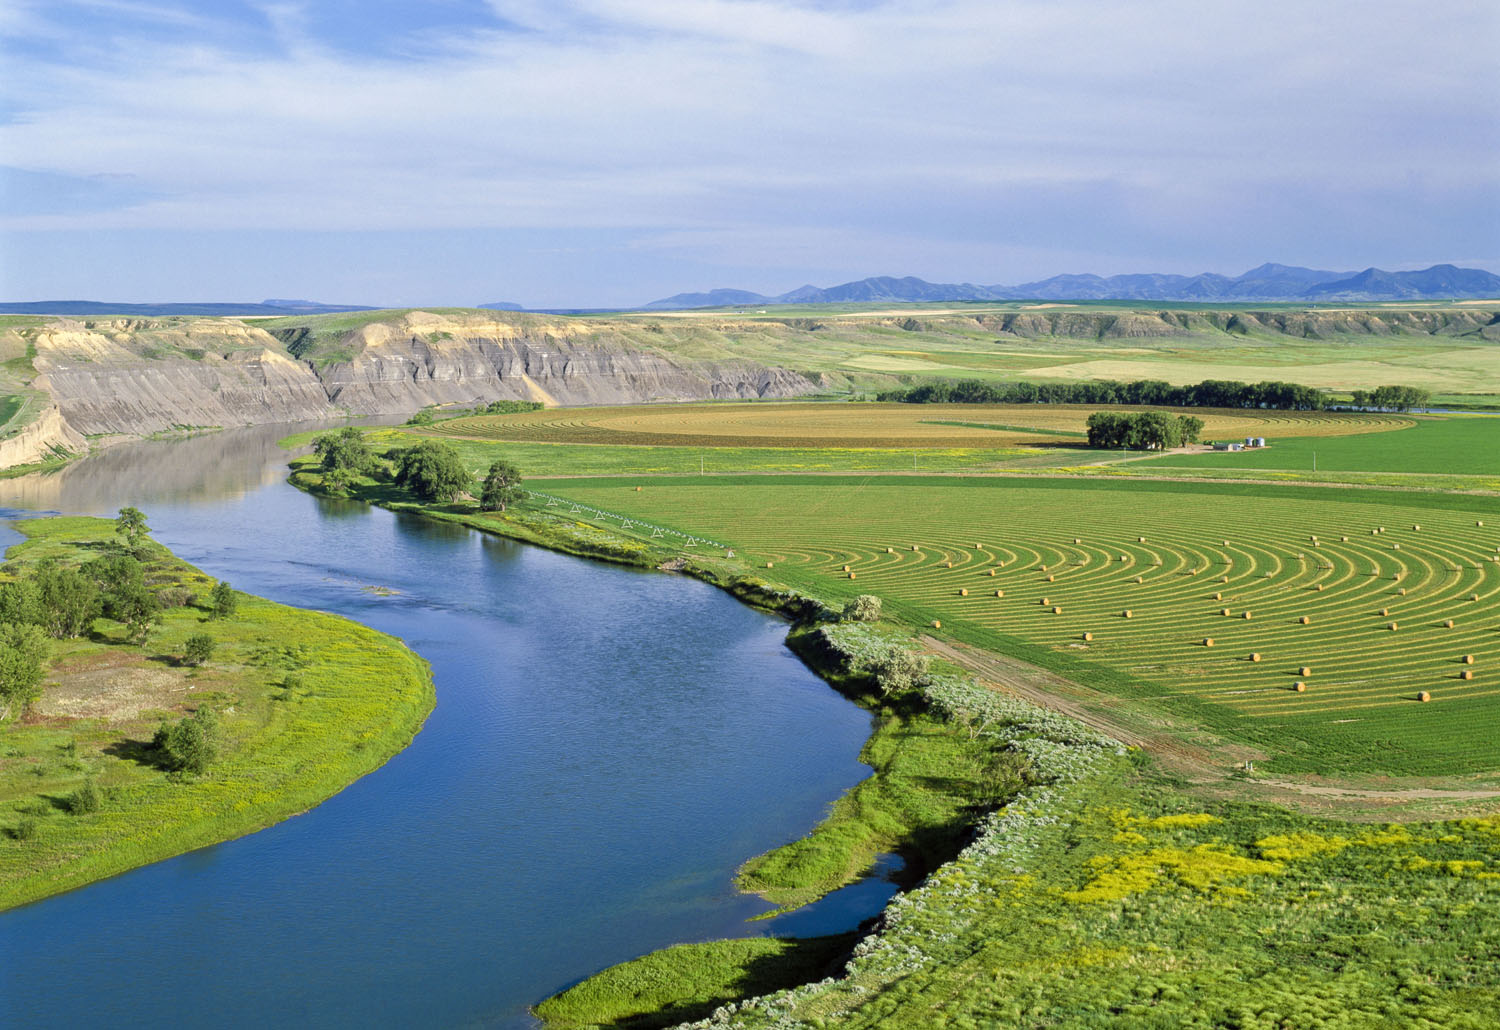 Montana's Greatest Wonder: The Missouri River (Part 3 of 5)